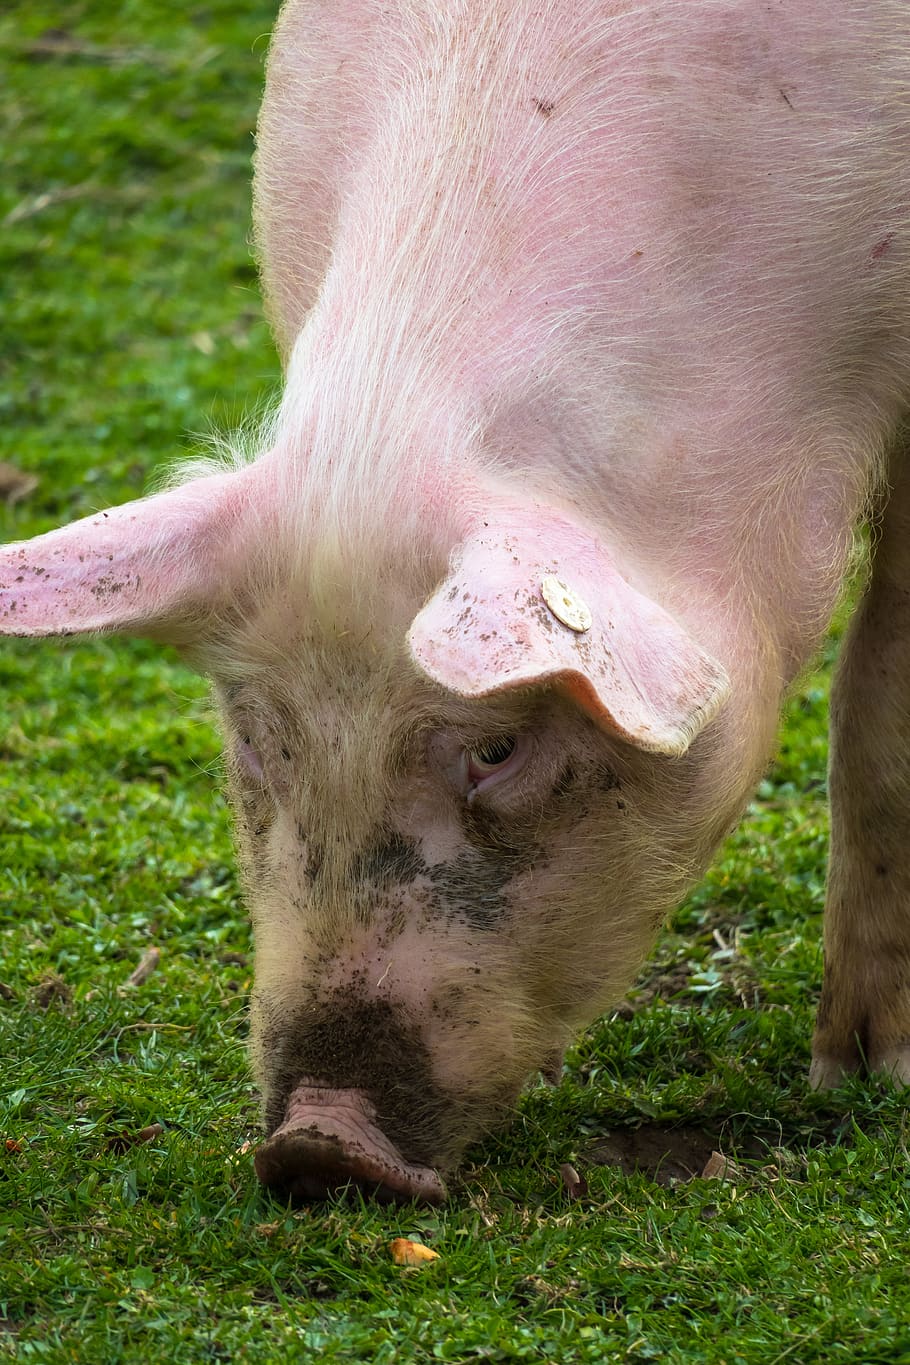 pig, eat, domestic pig, sow, bristles, bristle cattle, agriculture, livestock, cattle, animal